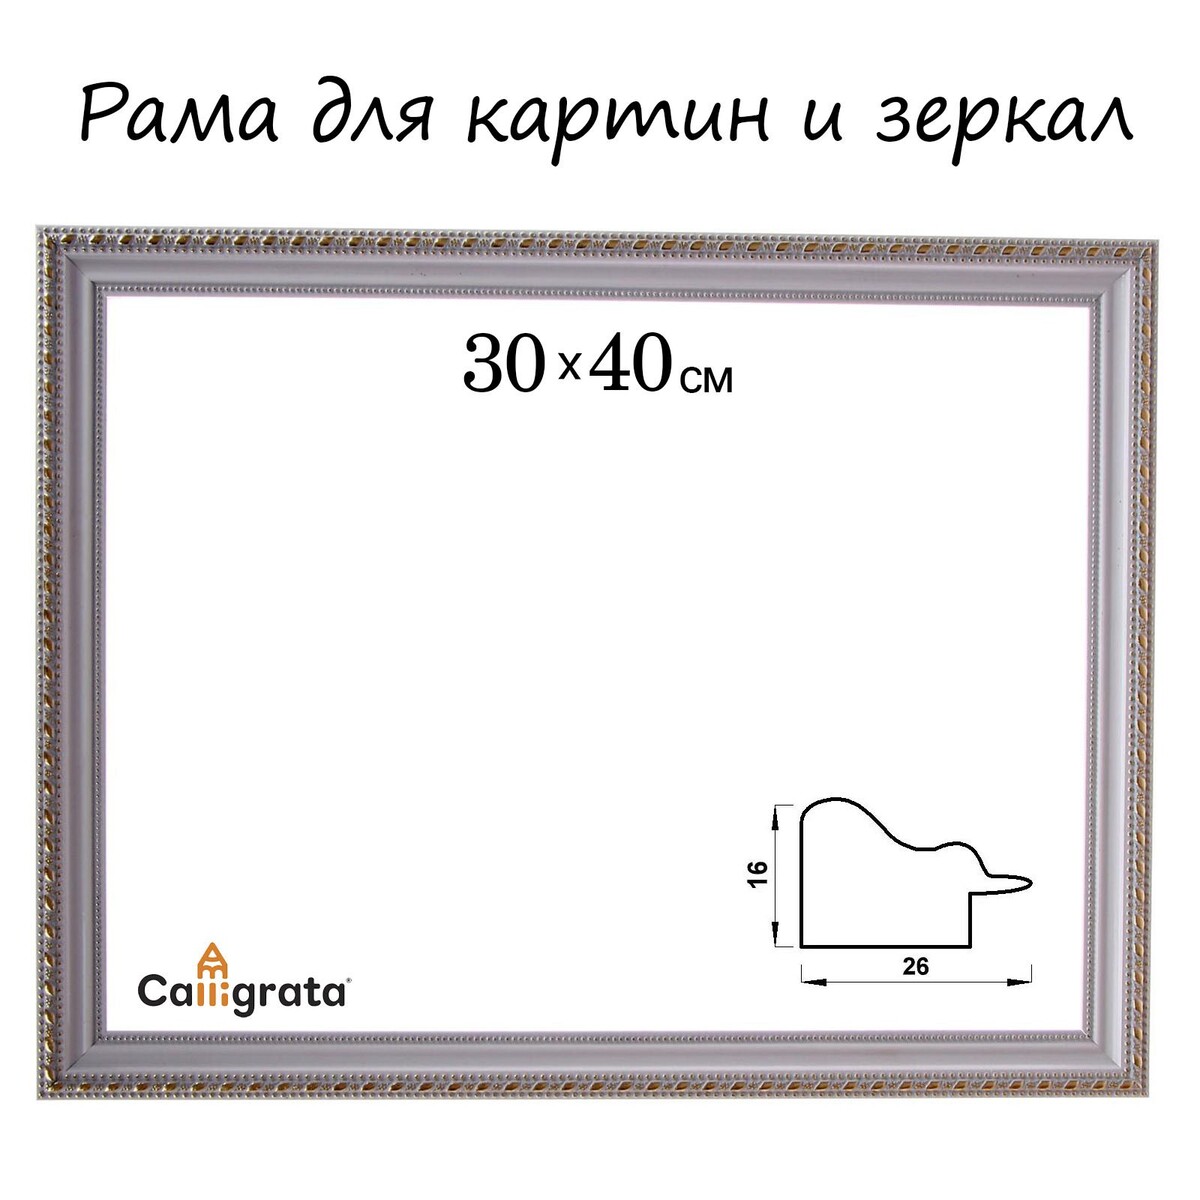 Рама для картин (зеркал) 30 х 40 х 2,6 см, пластиковая, calligrata 6429, бело-золотая